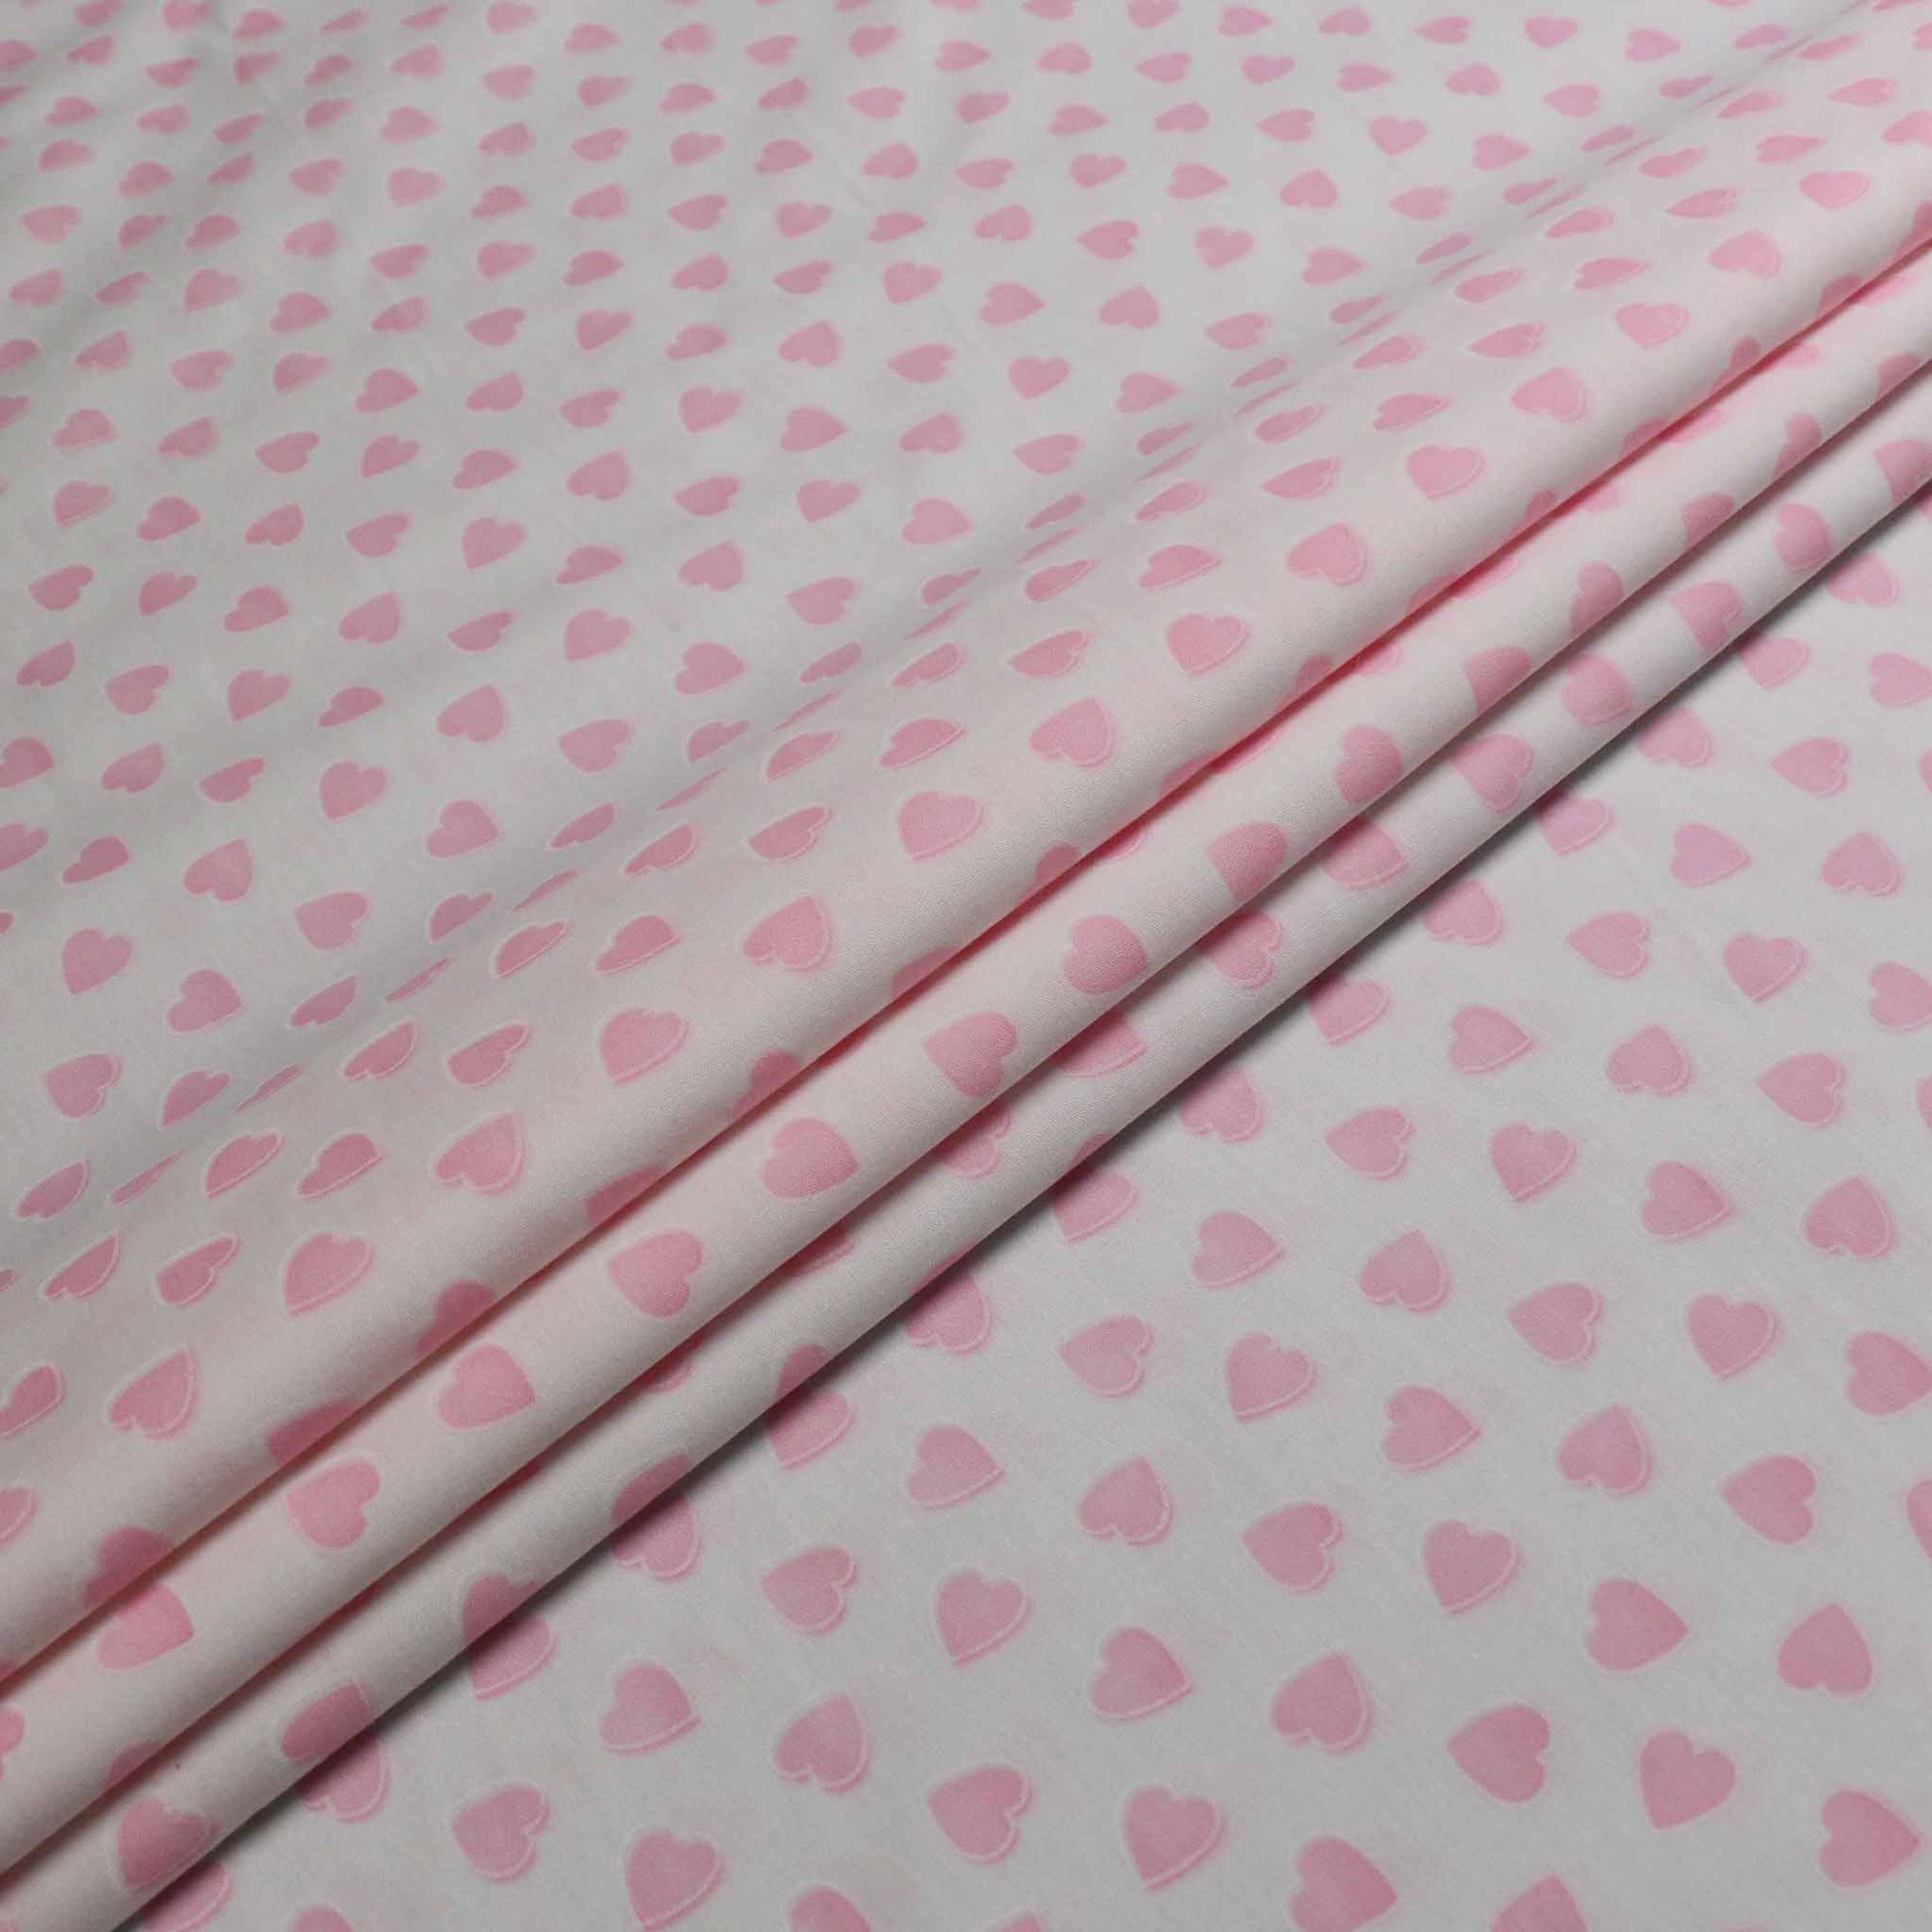 pink love hearts printed on white cotton poplin dressmaking fabric